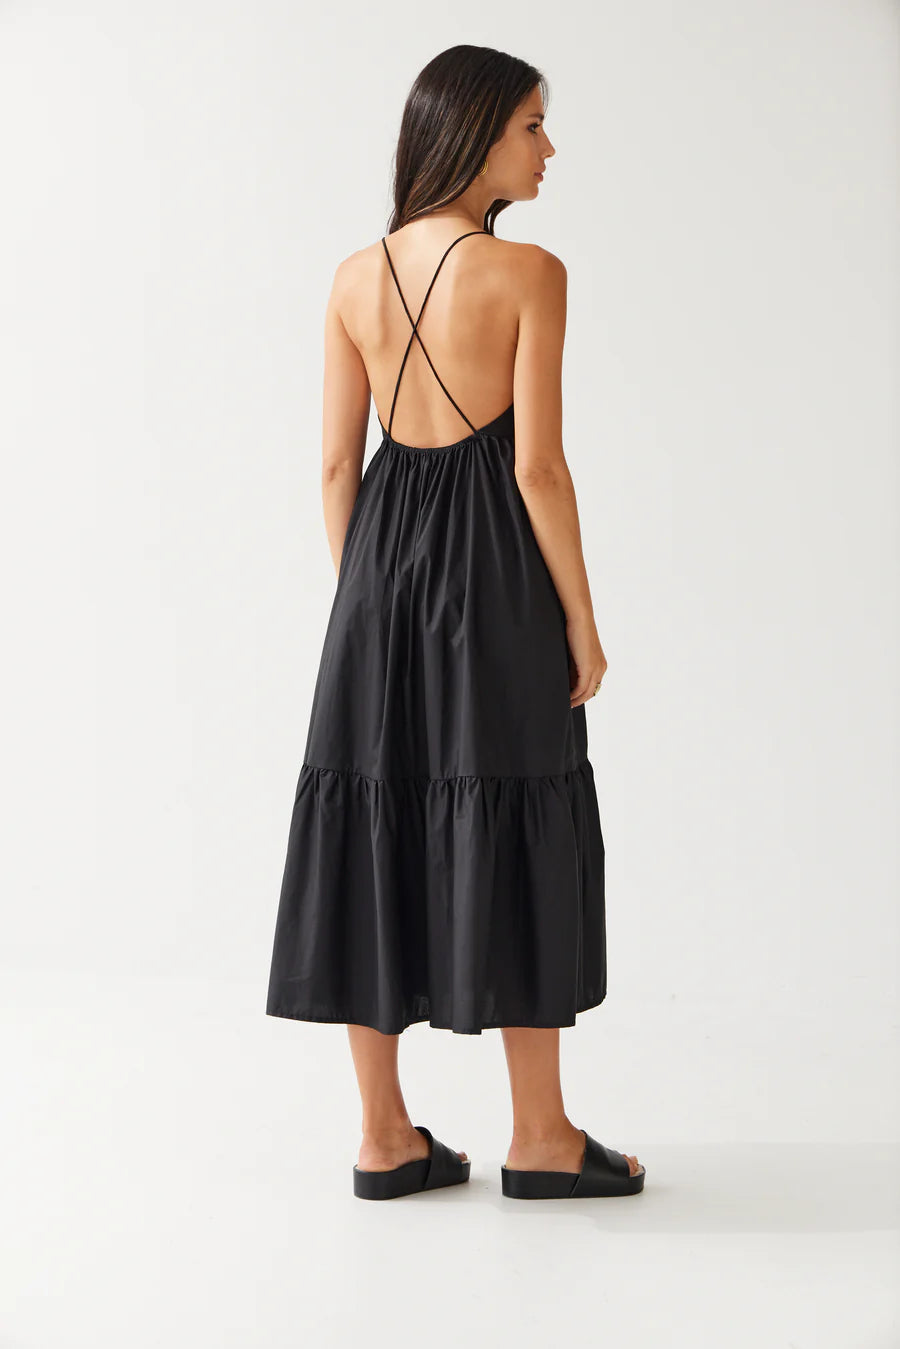 TUESDAY LABEL - Canyon Dress (Black)